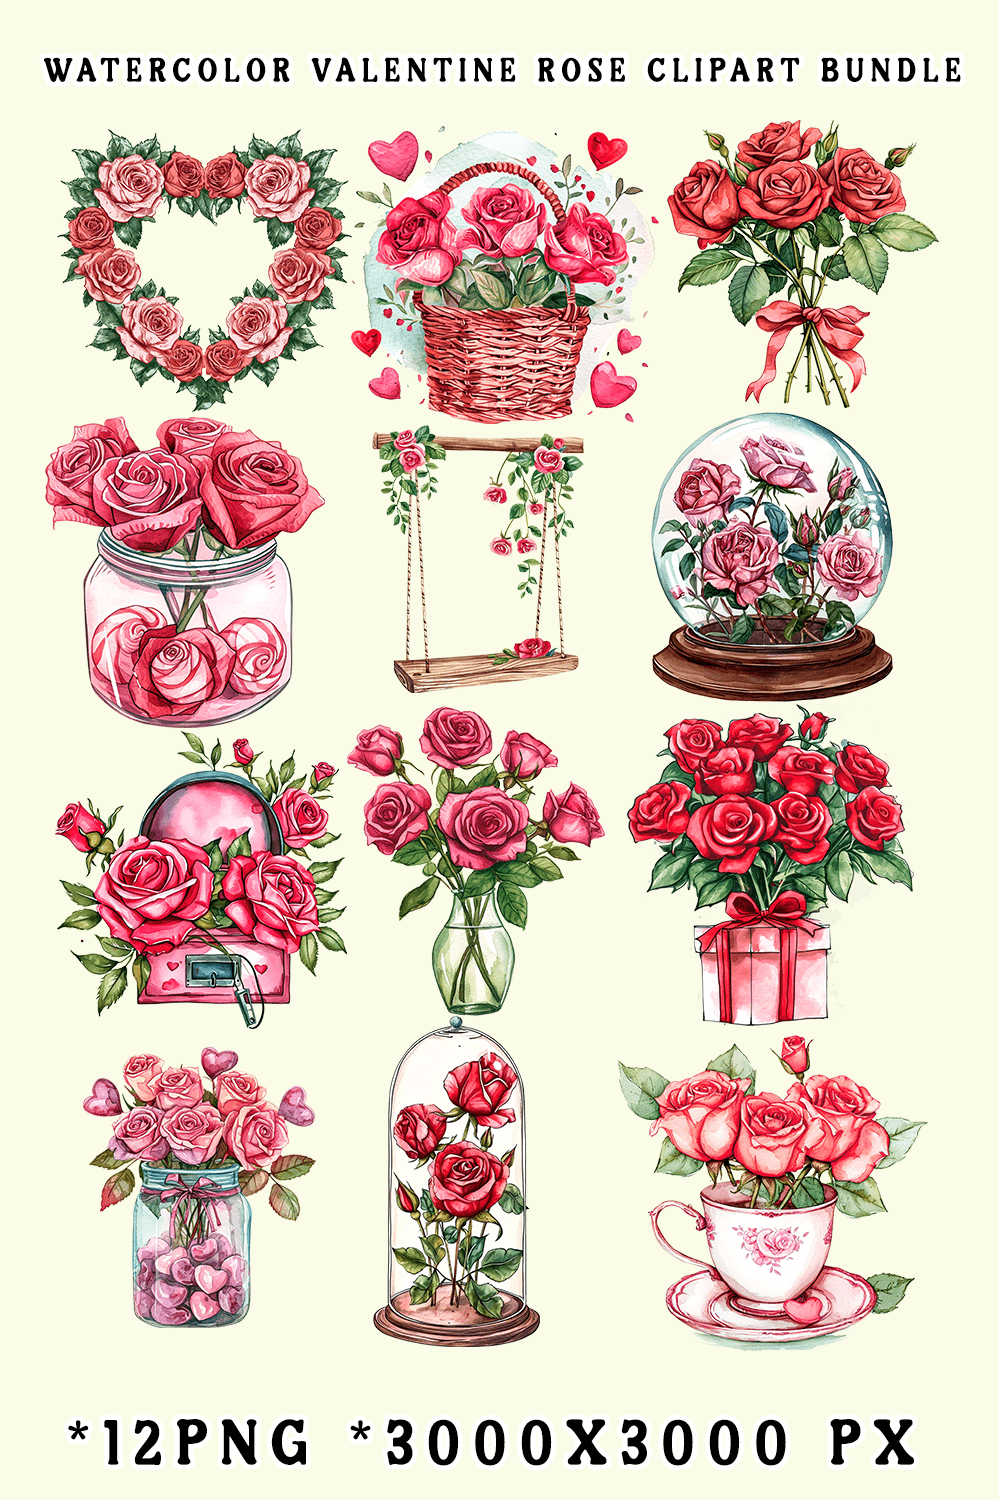 Watercolor Valentine Rose Clipart Bundle pinterest preview image.